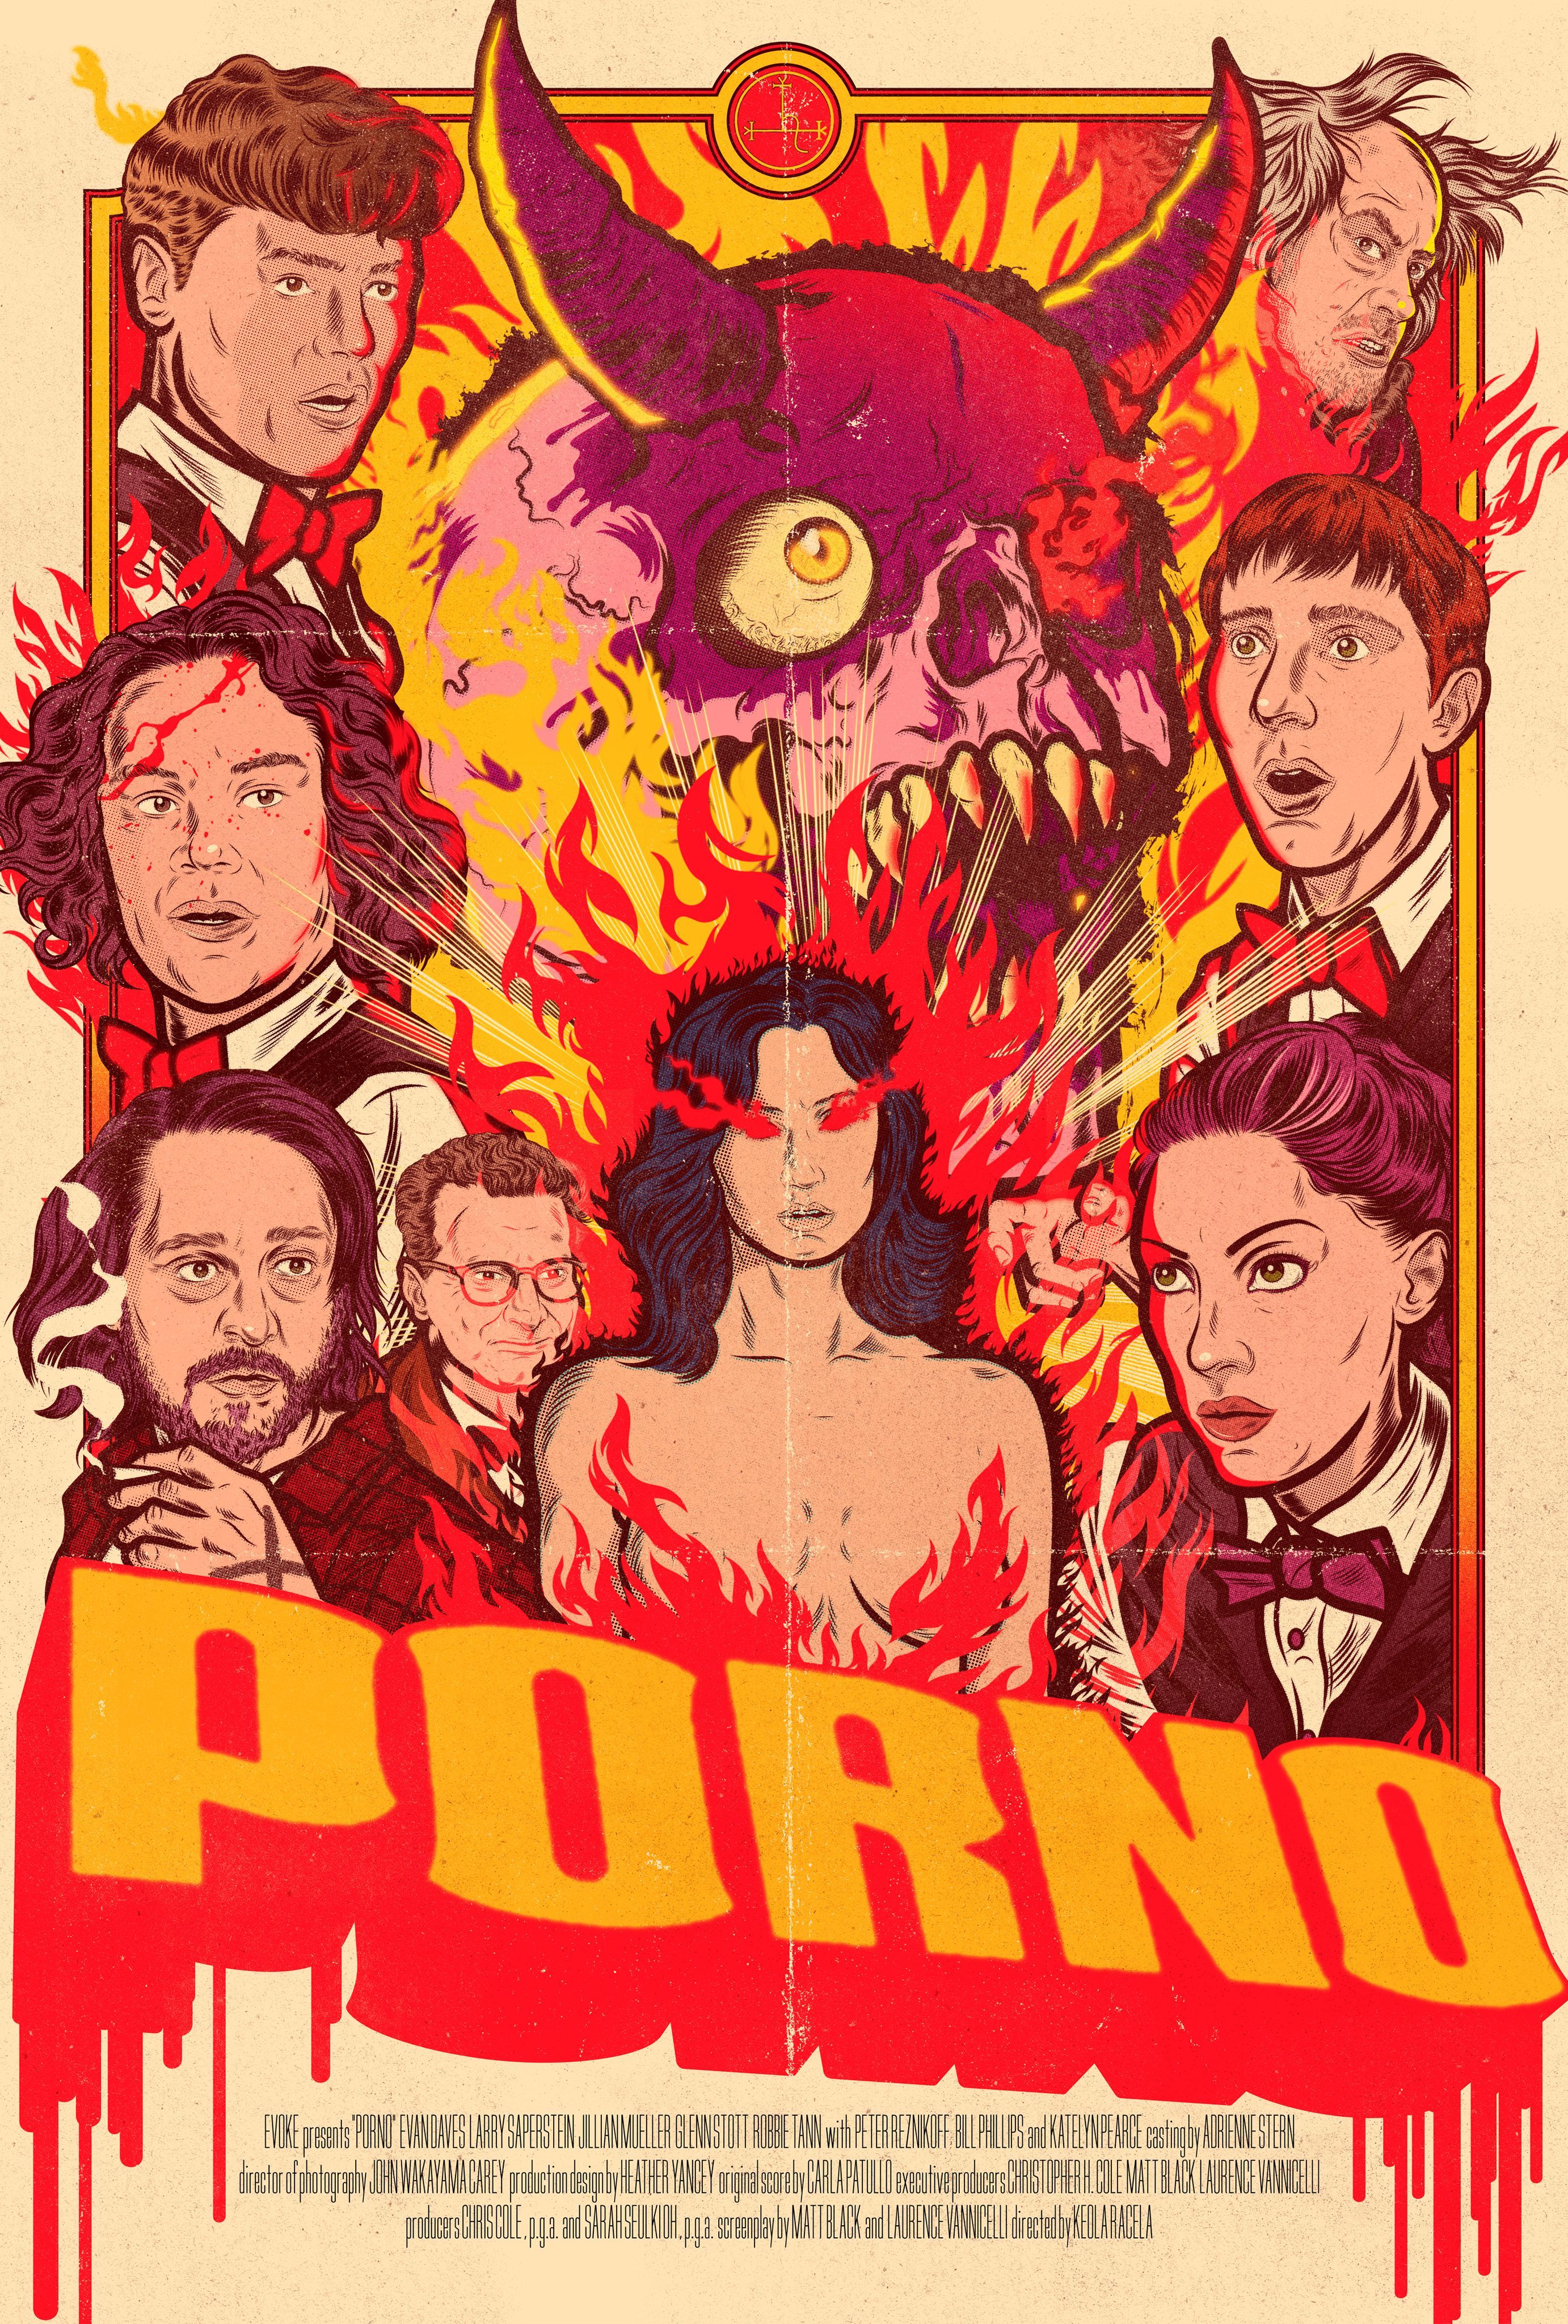 Porn Satanic Artwork - Fantasia Festival | Porno